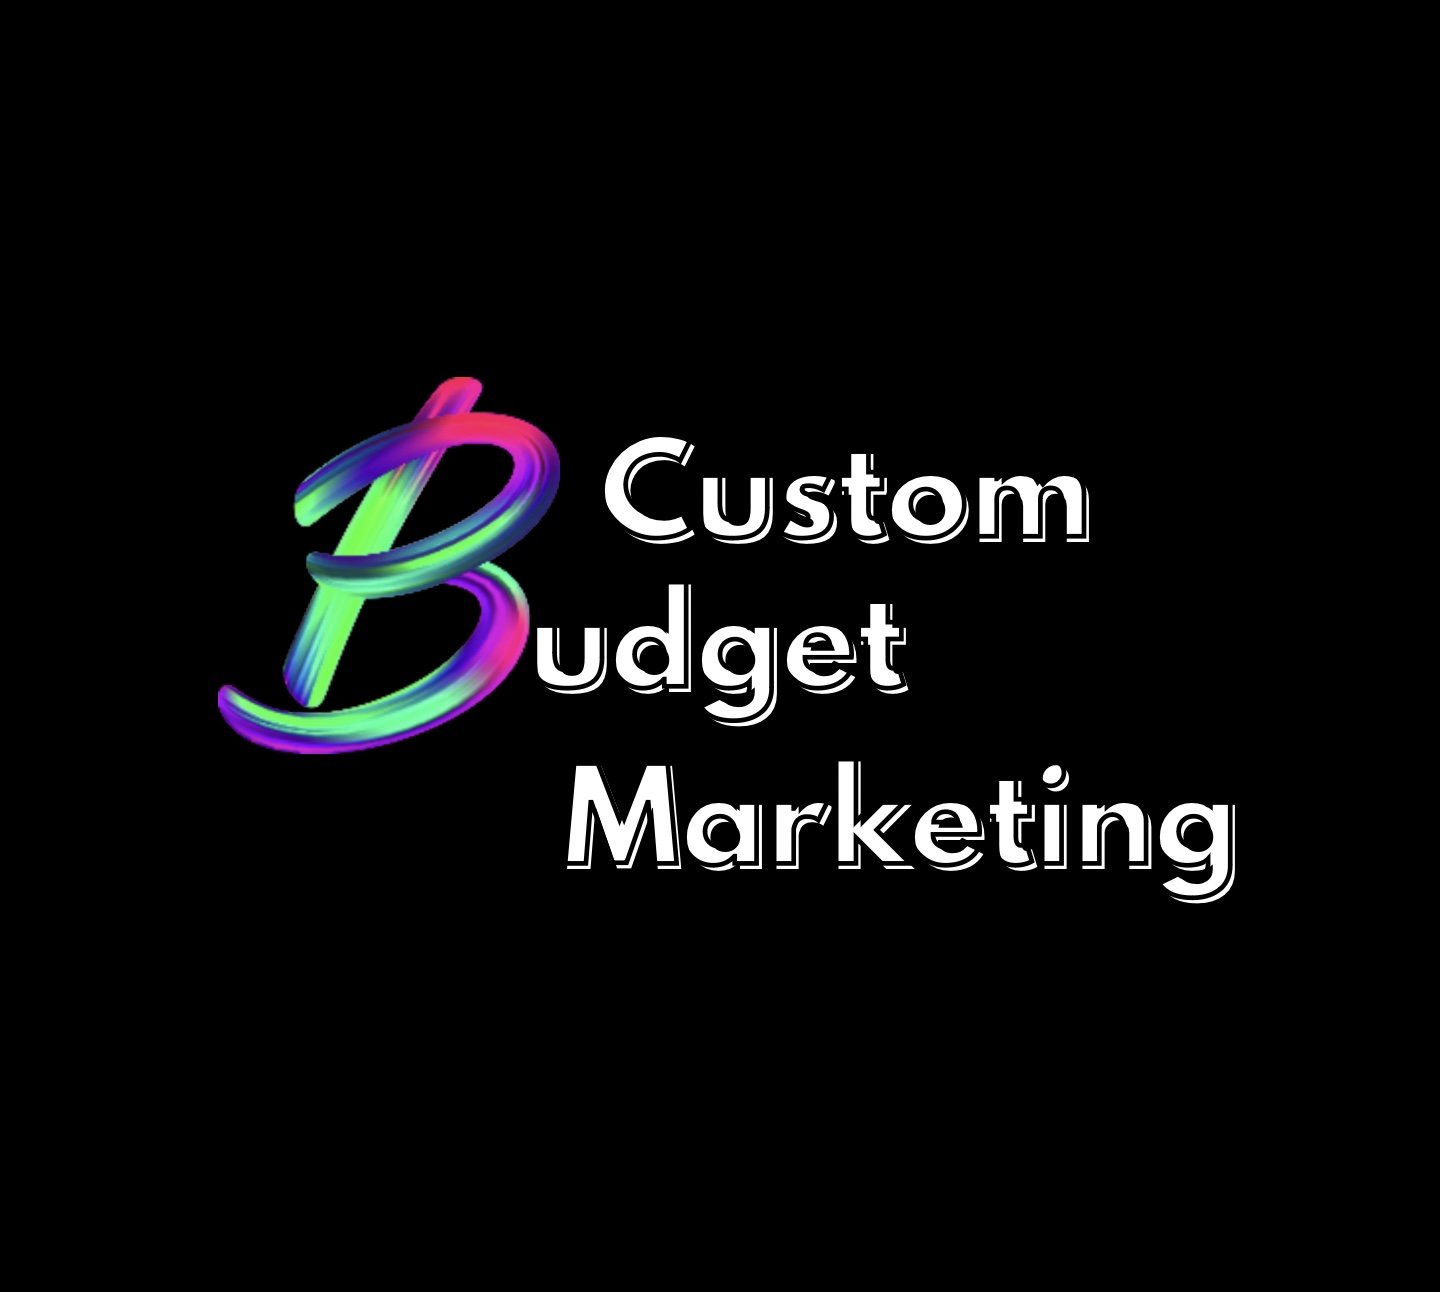 Custom Budget Marketing